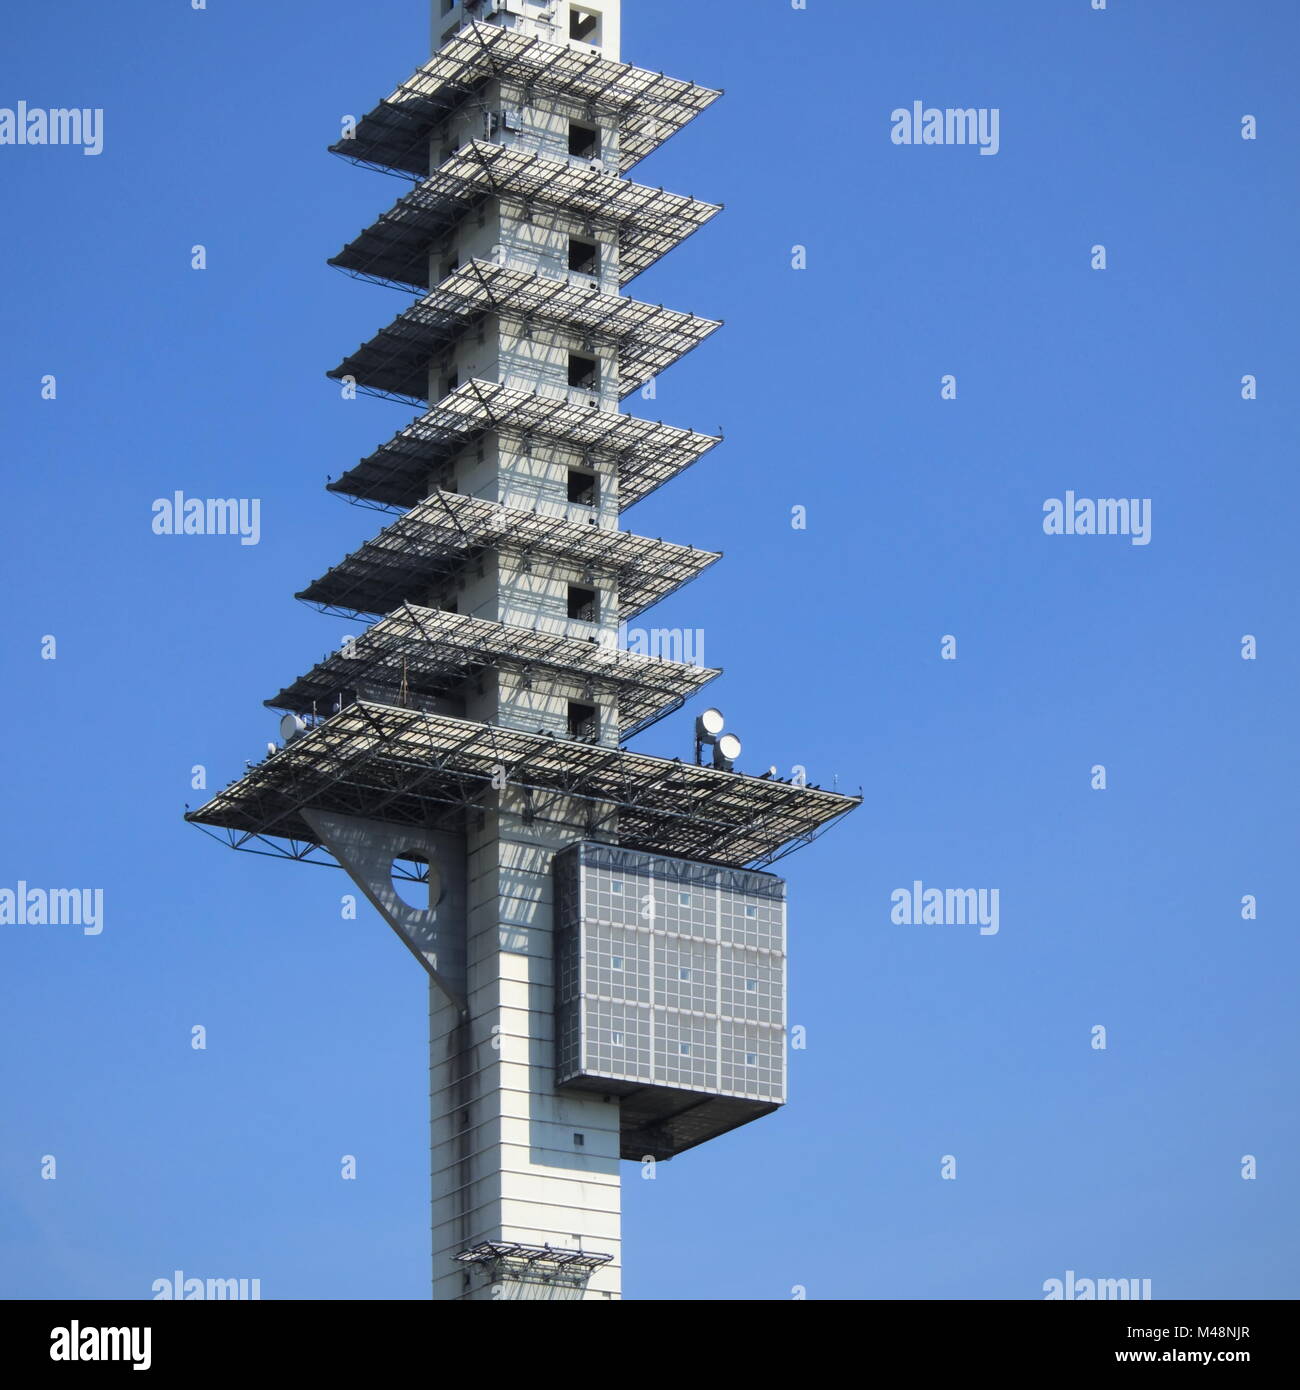 Hanover - Telecommunication tower Stock Photo